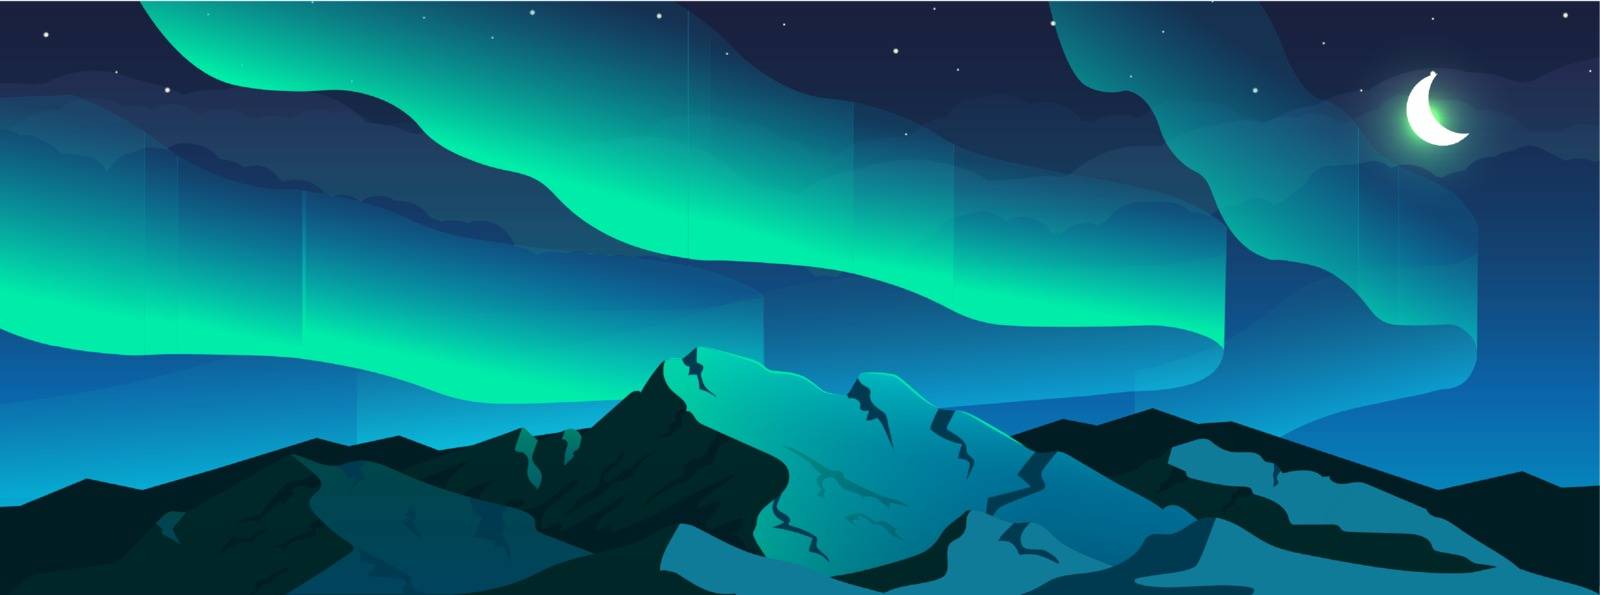 Aurora borealis phenomenon flat color vector illustration by ntl